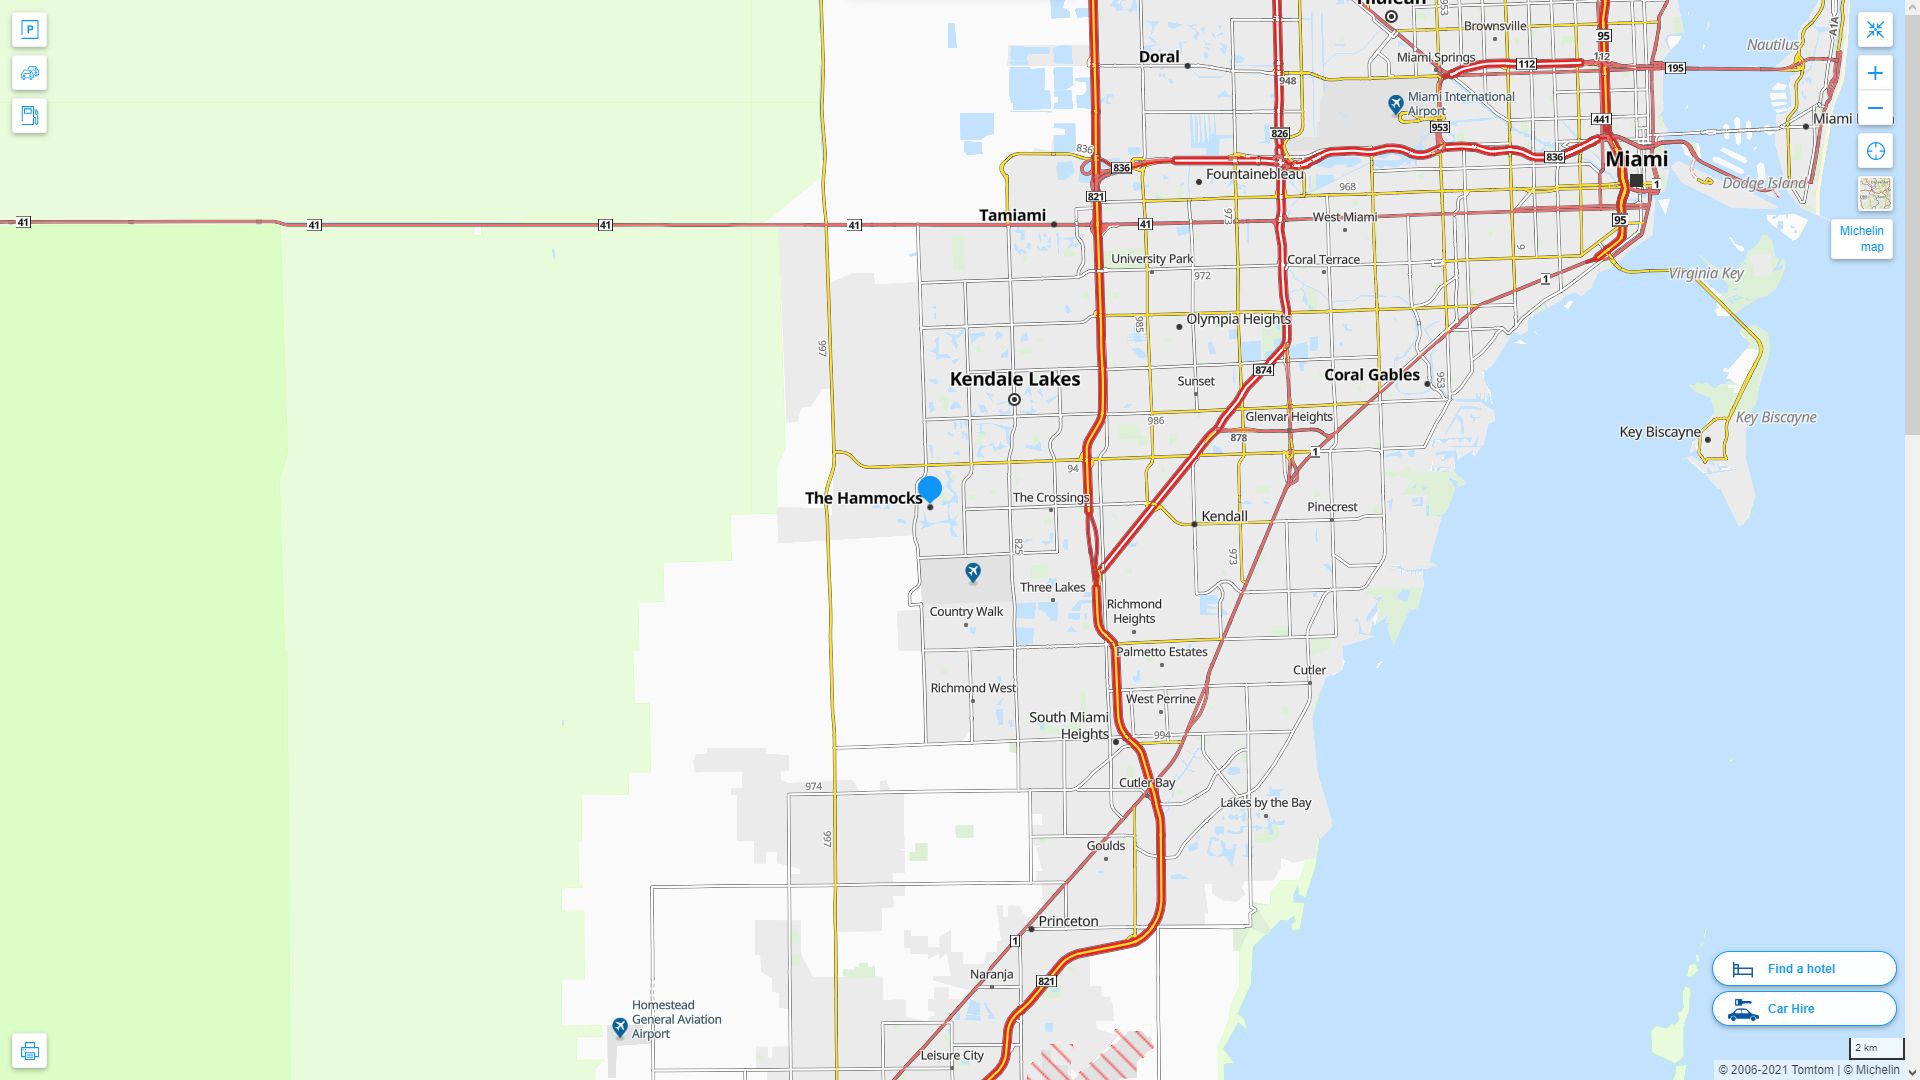 The Hammocks Florida Highway and Road Map